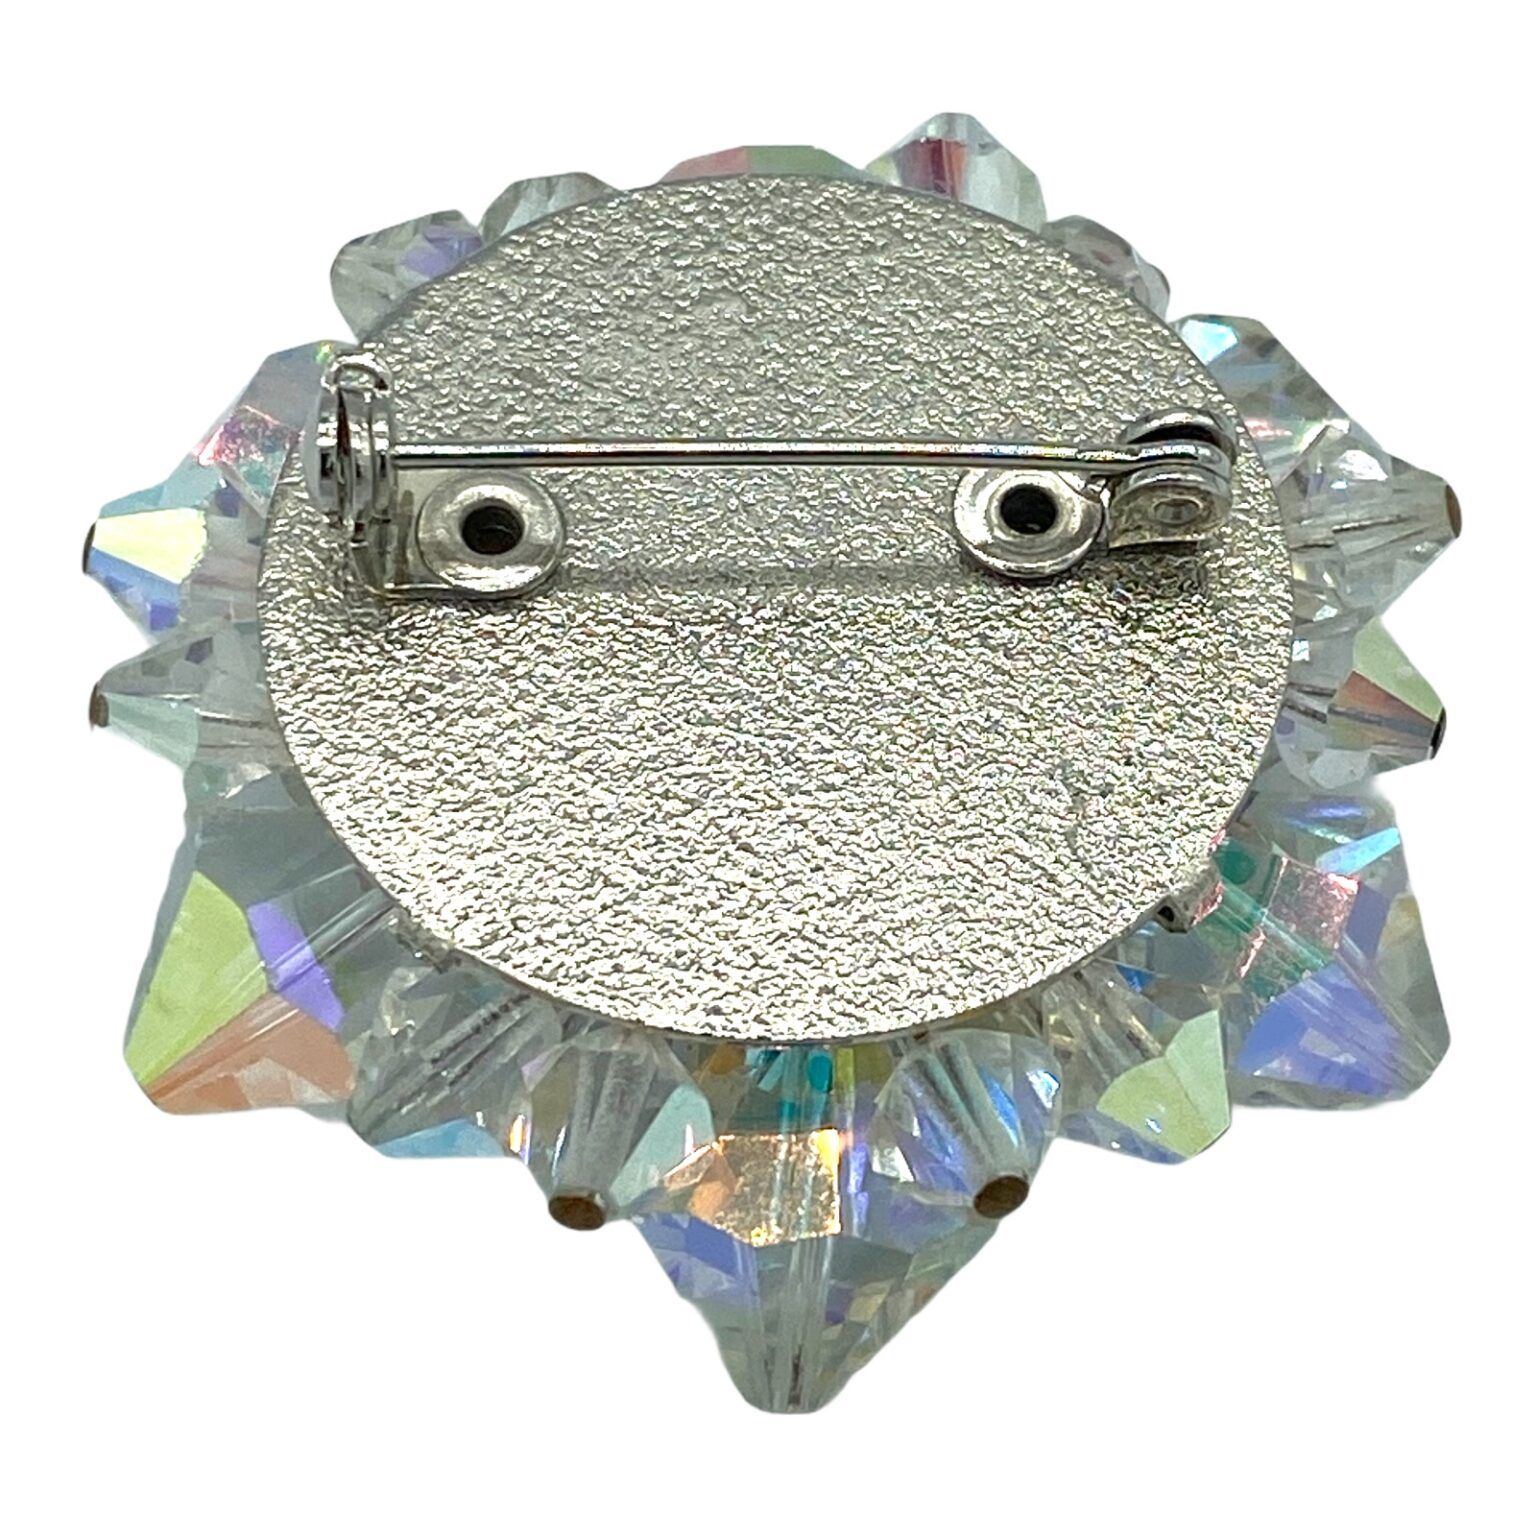 Vintage Aurora Crystal Bead Brooch Pin